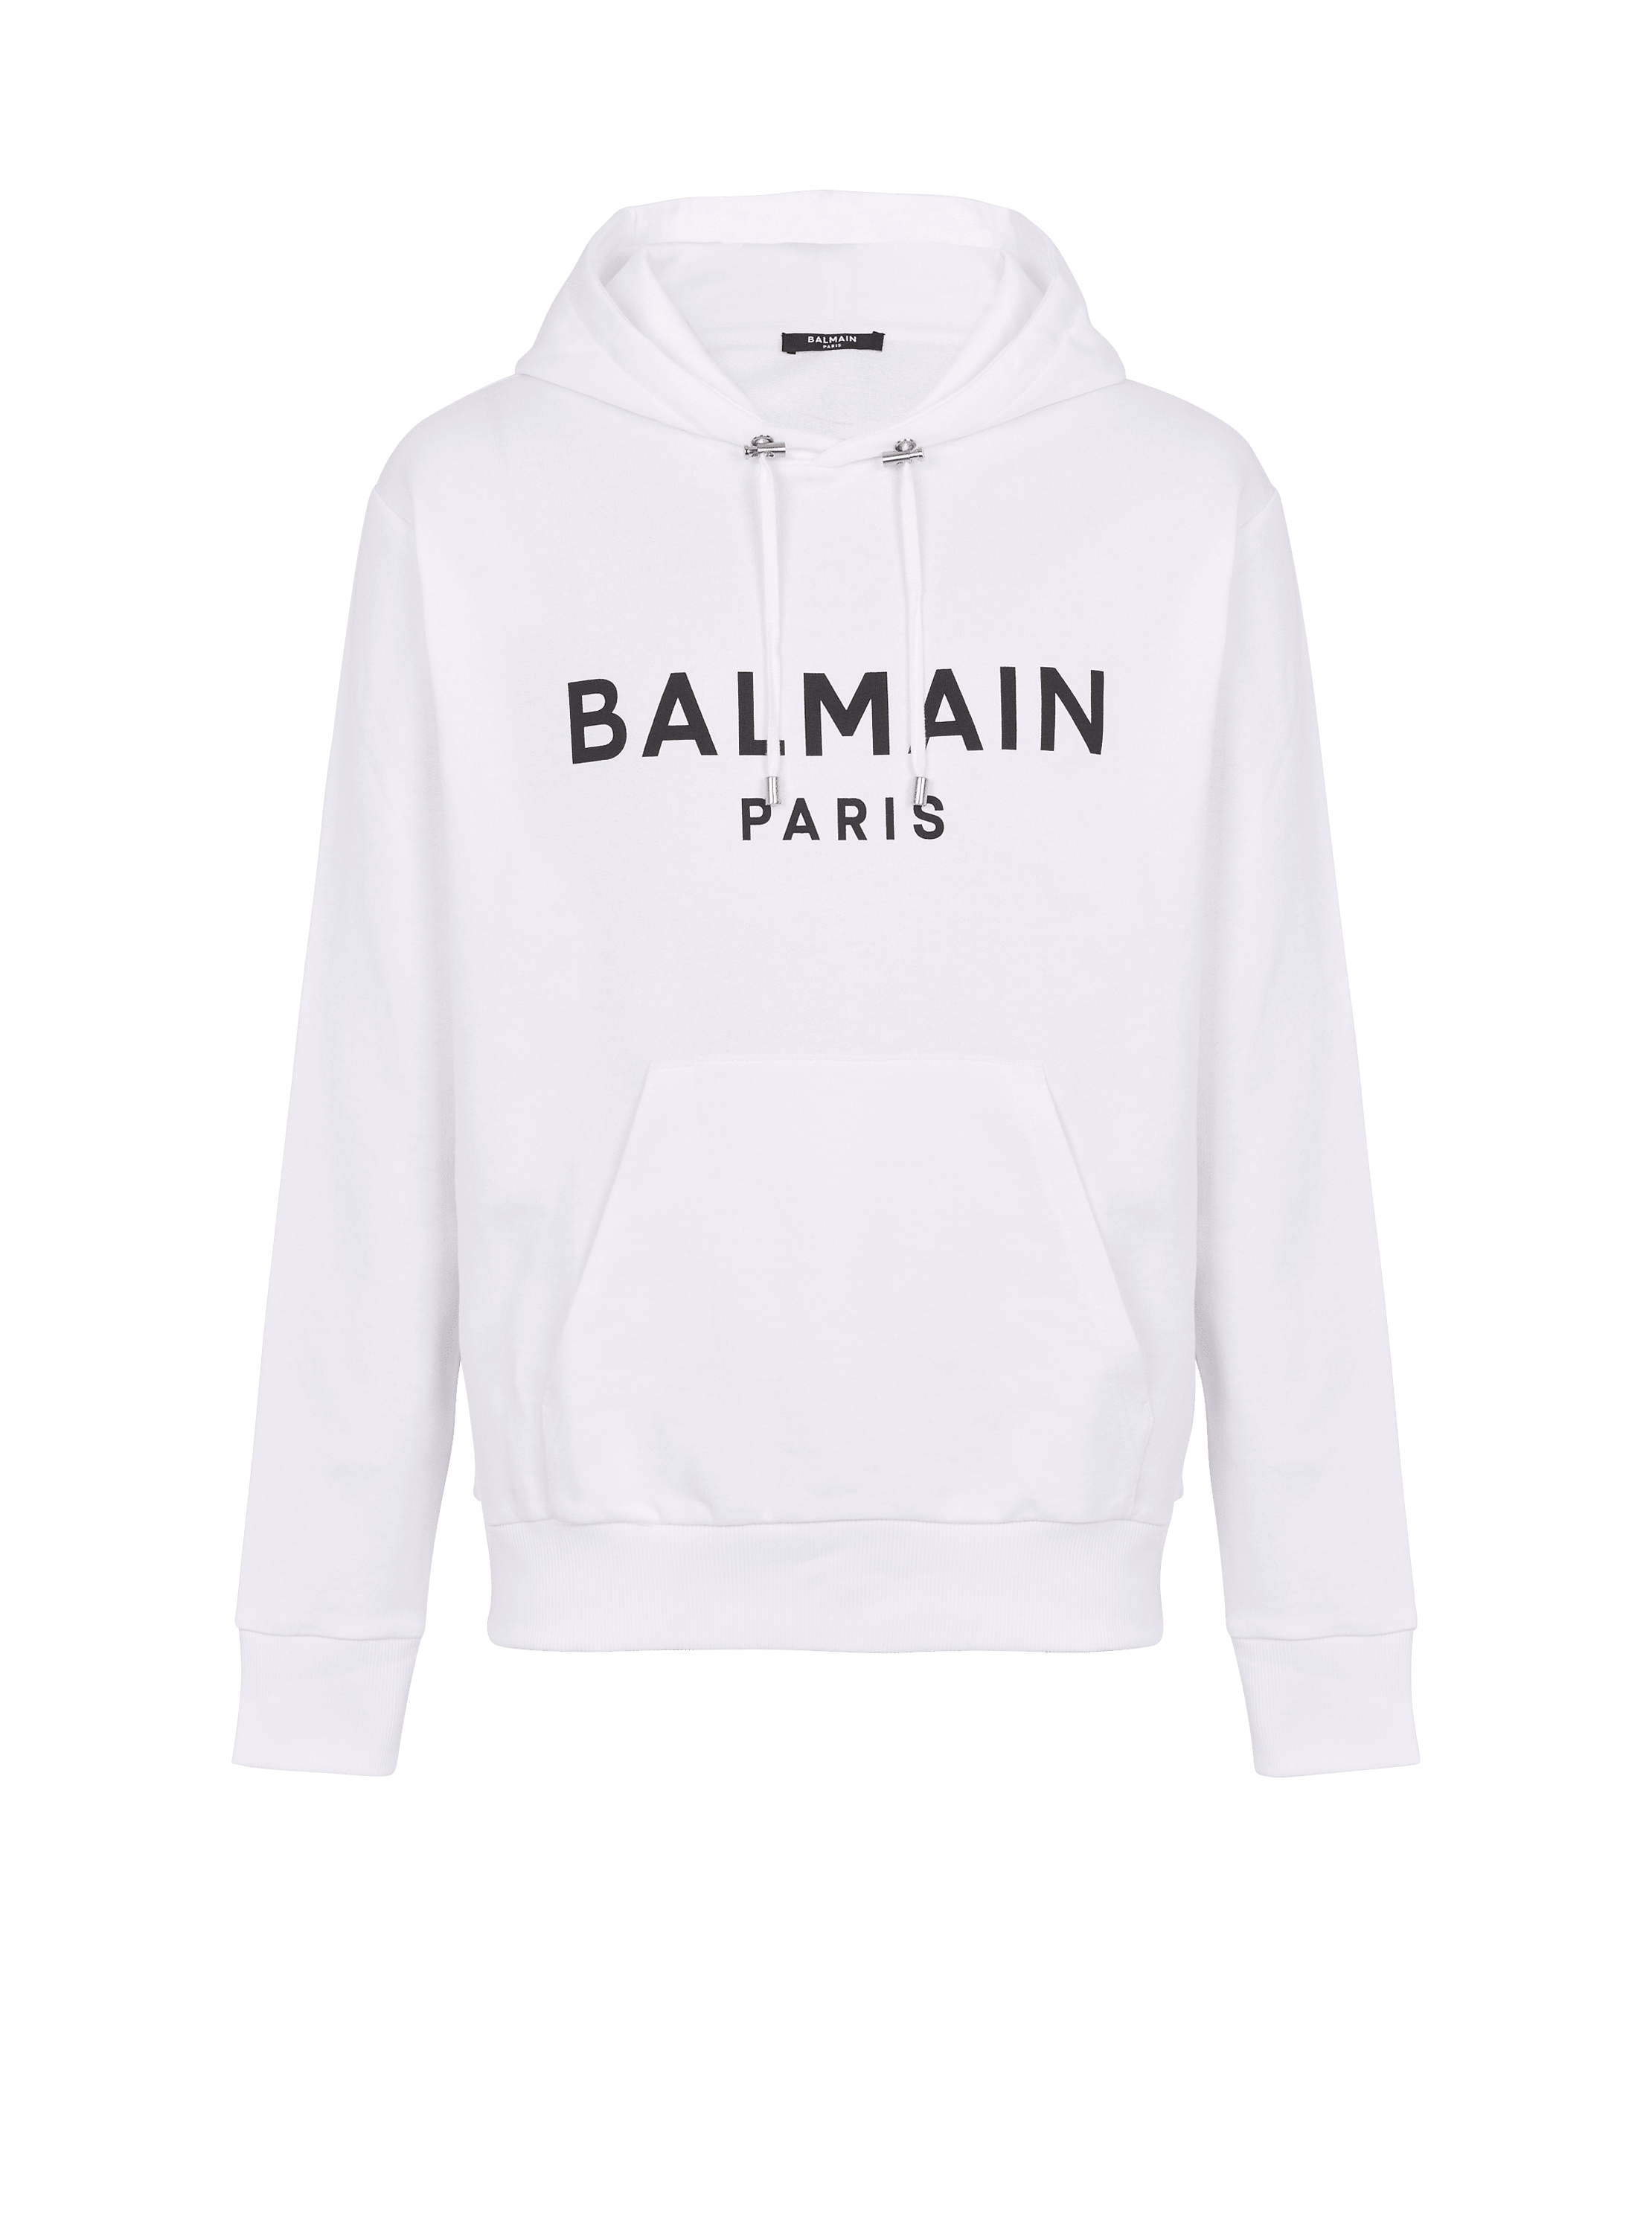 Balmain Paris hooded sweatshirt - Men | BALMAIN